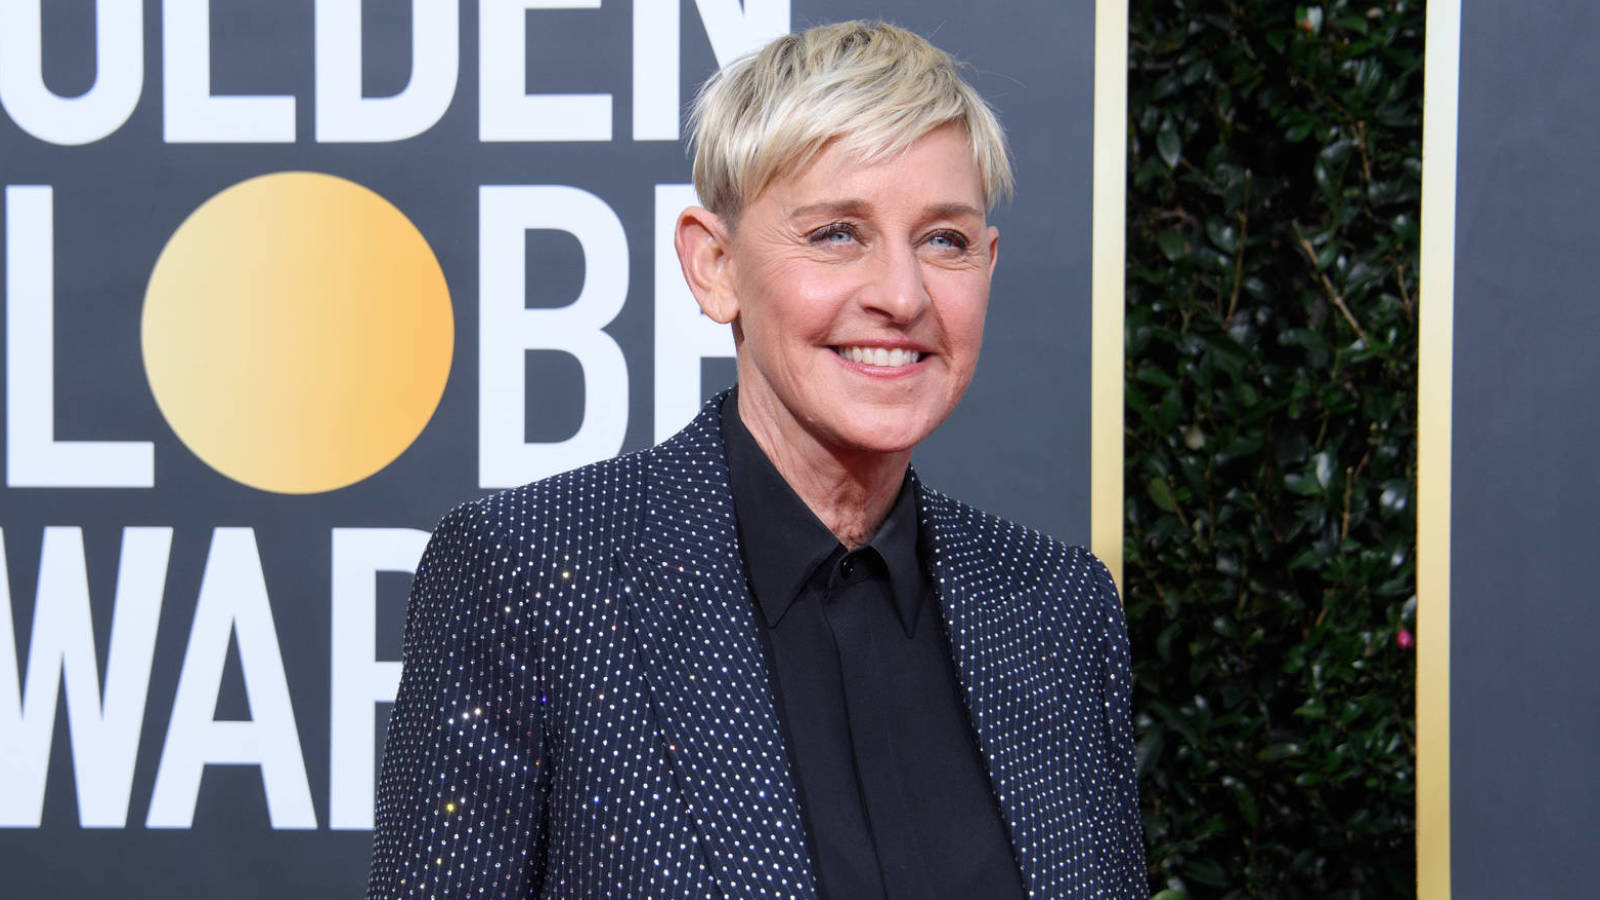 Details about 'The Ellen DeGeneres Show' final season revealed | Yardbarker